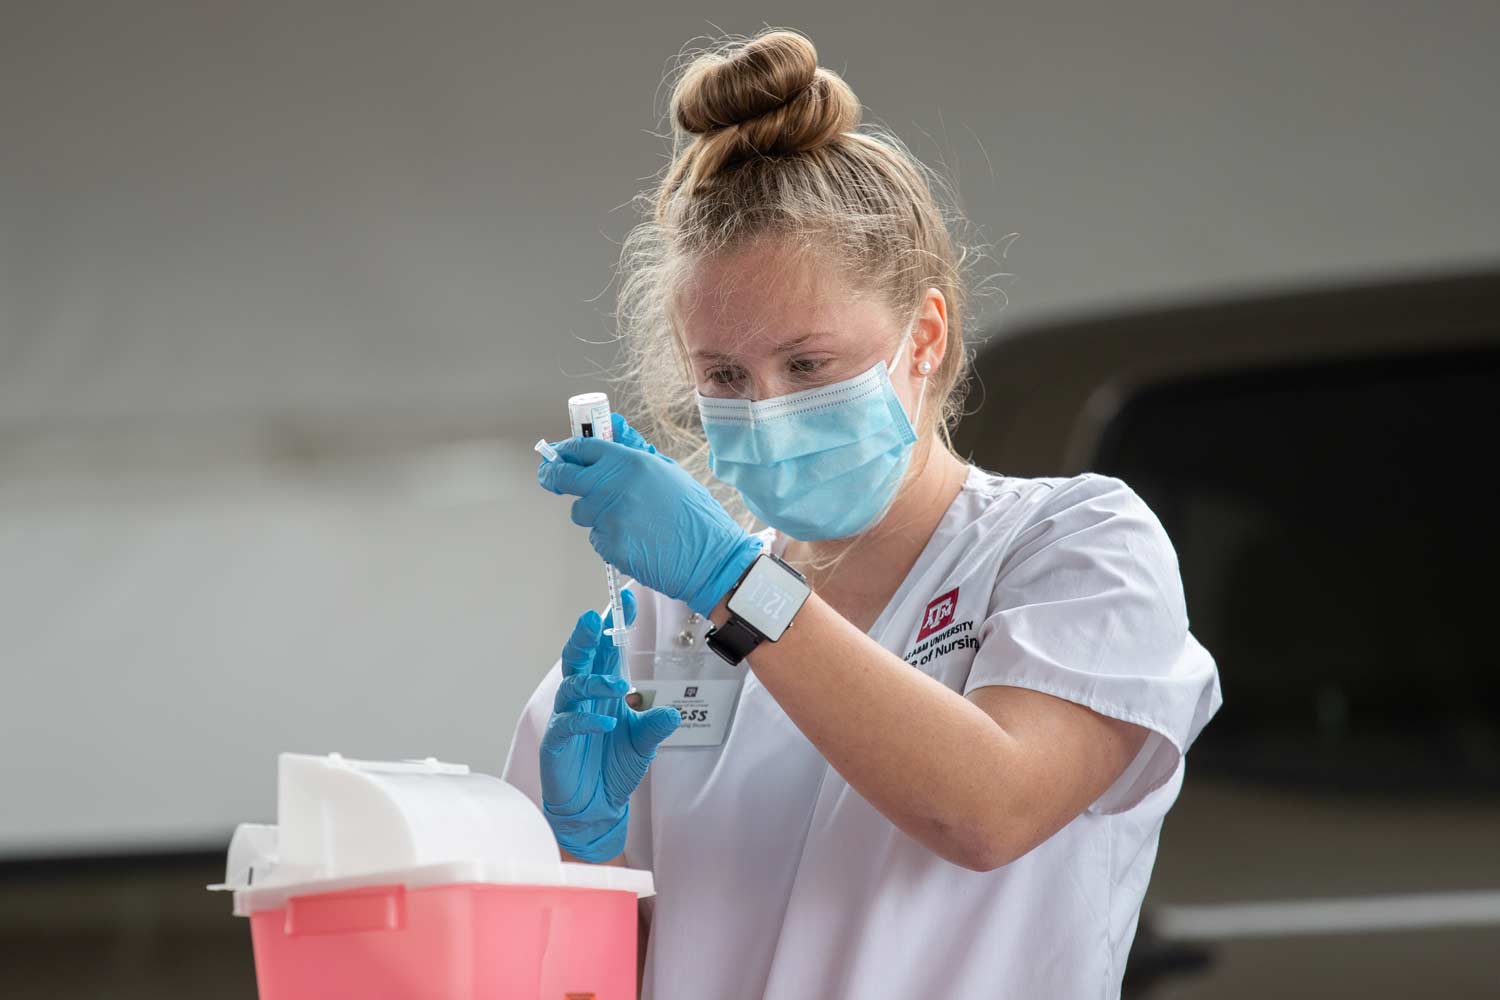 Texas A&M nursing student preparing a vaccine shot.